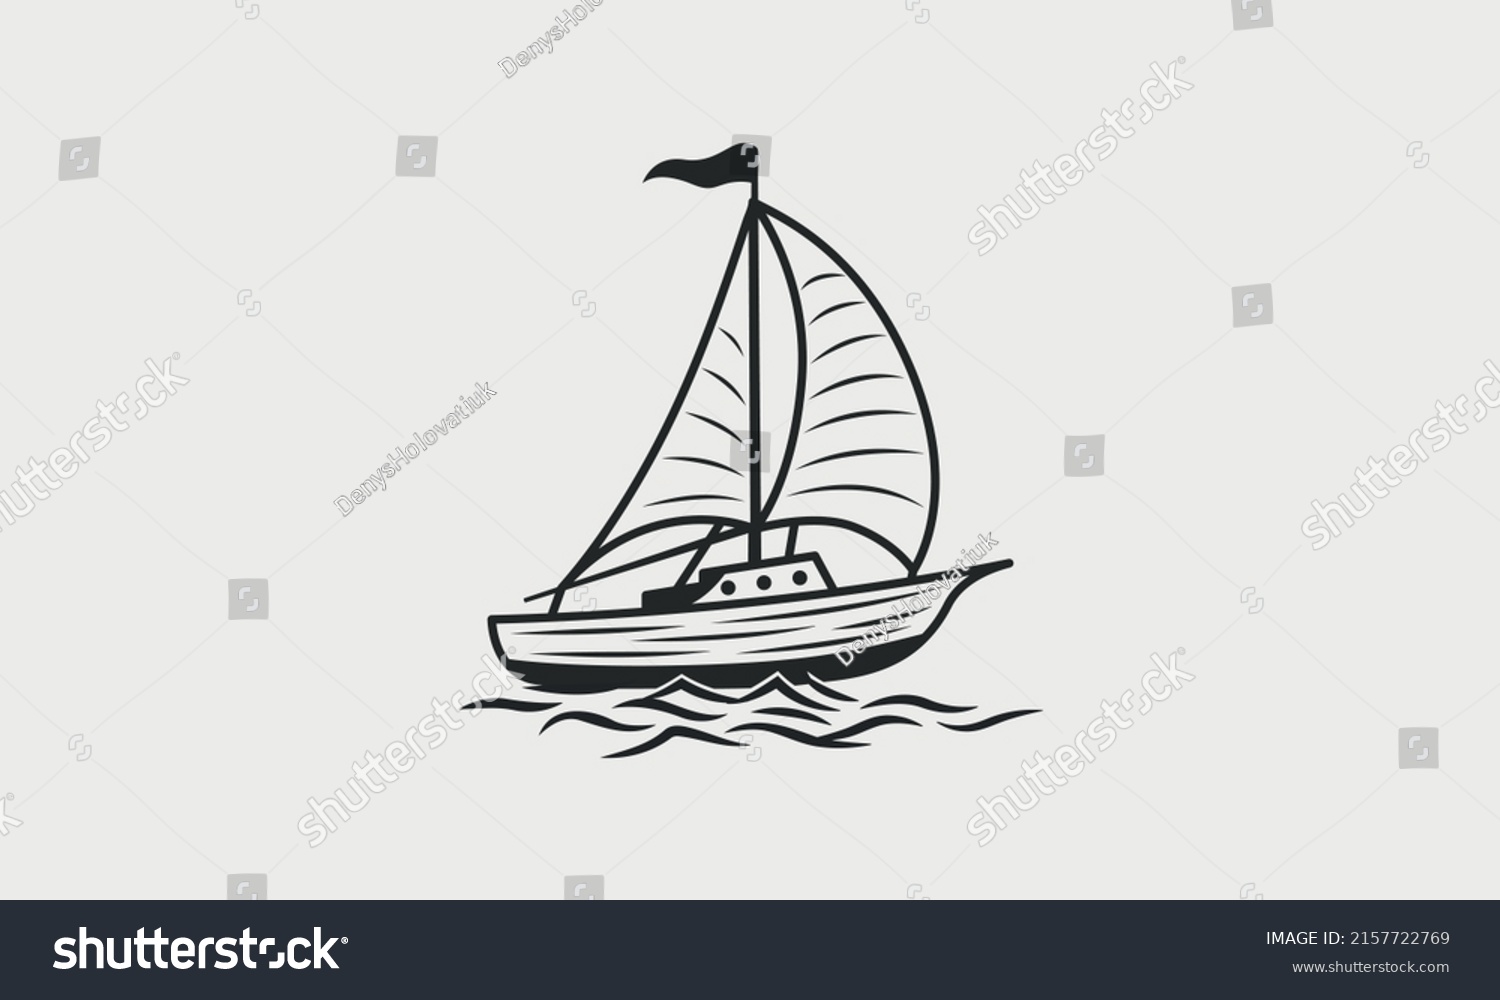 49,959 Sketch of boat Images, Stock Photos & Vectors | Shutterstock